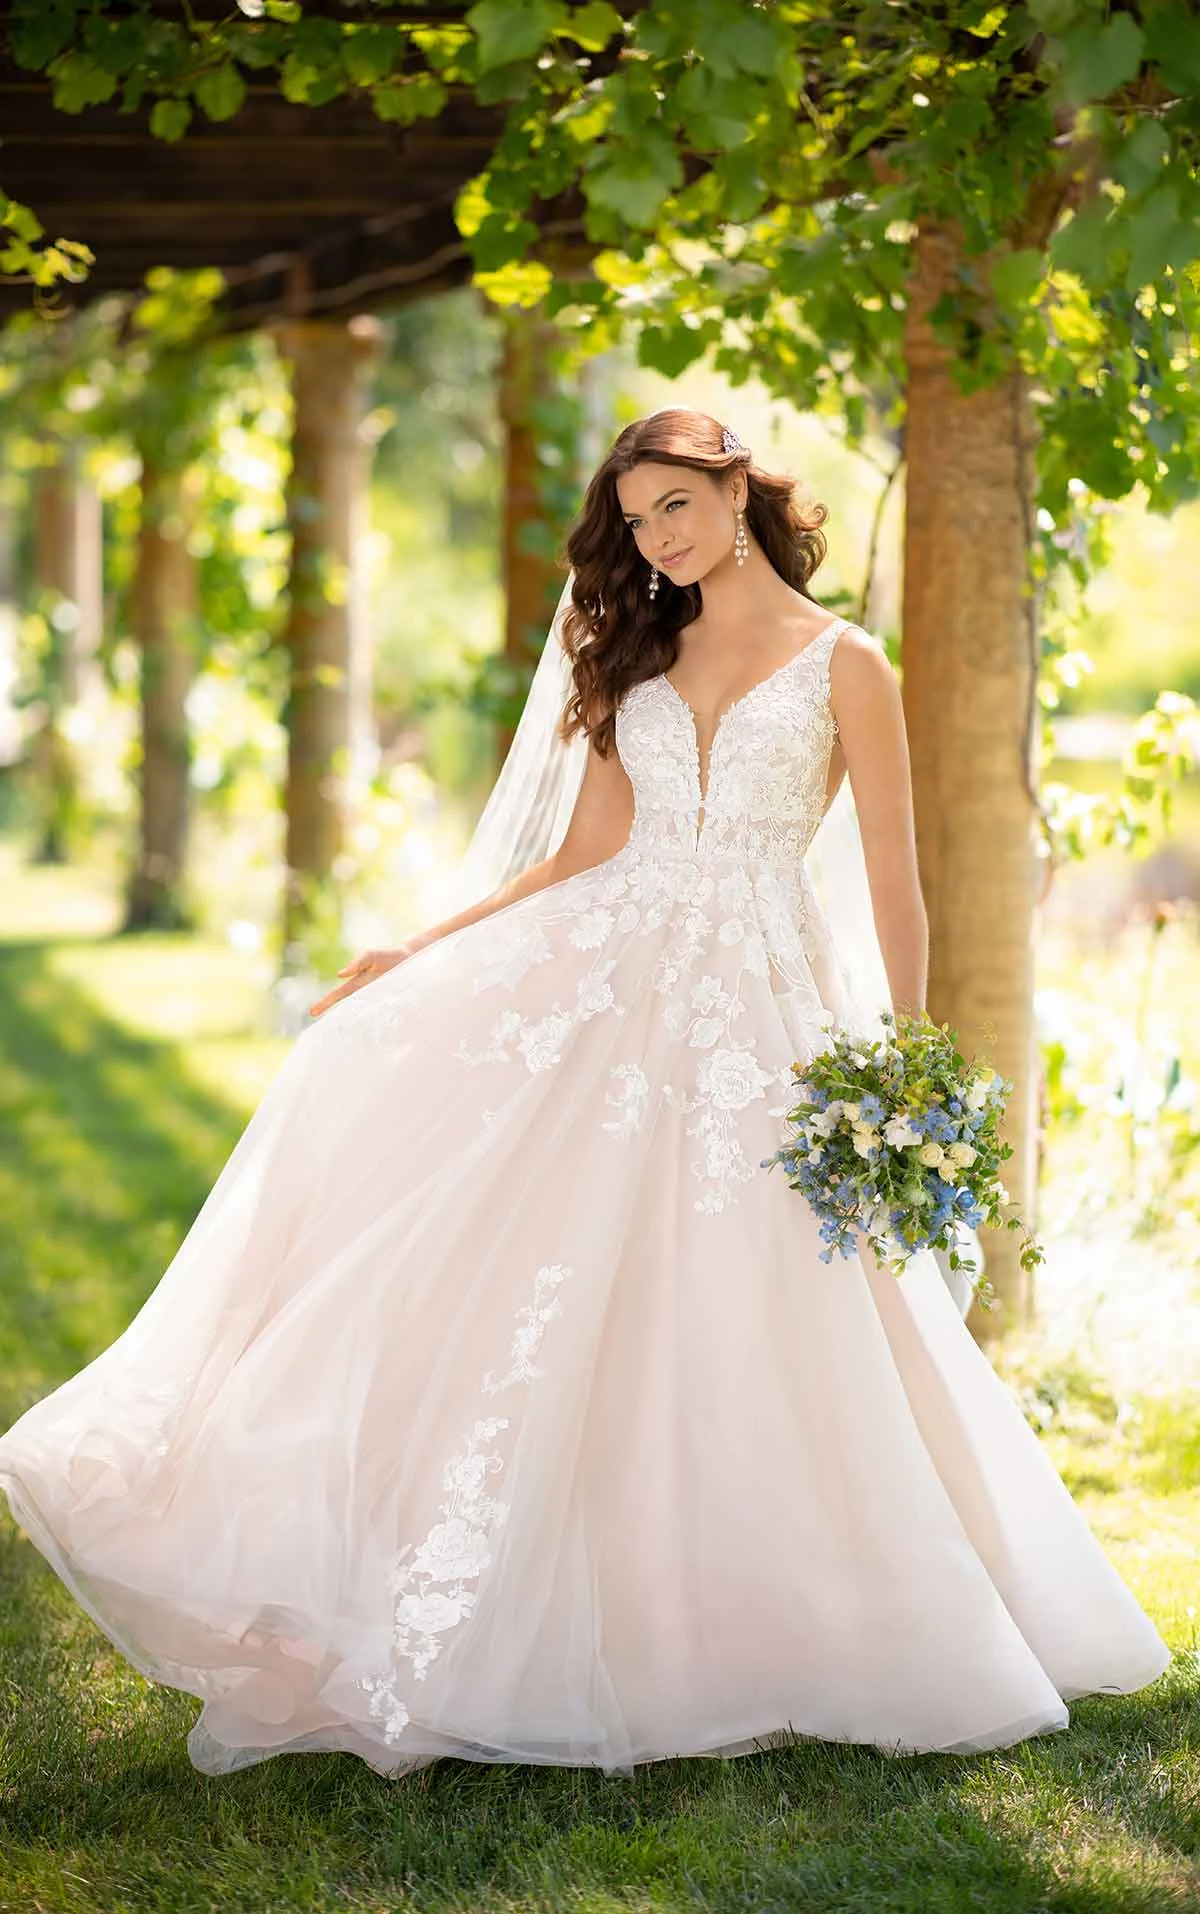 Full ALine Wedding Dress with Floral Details Essense of